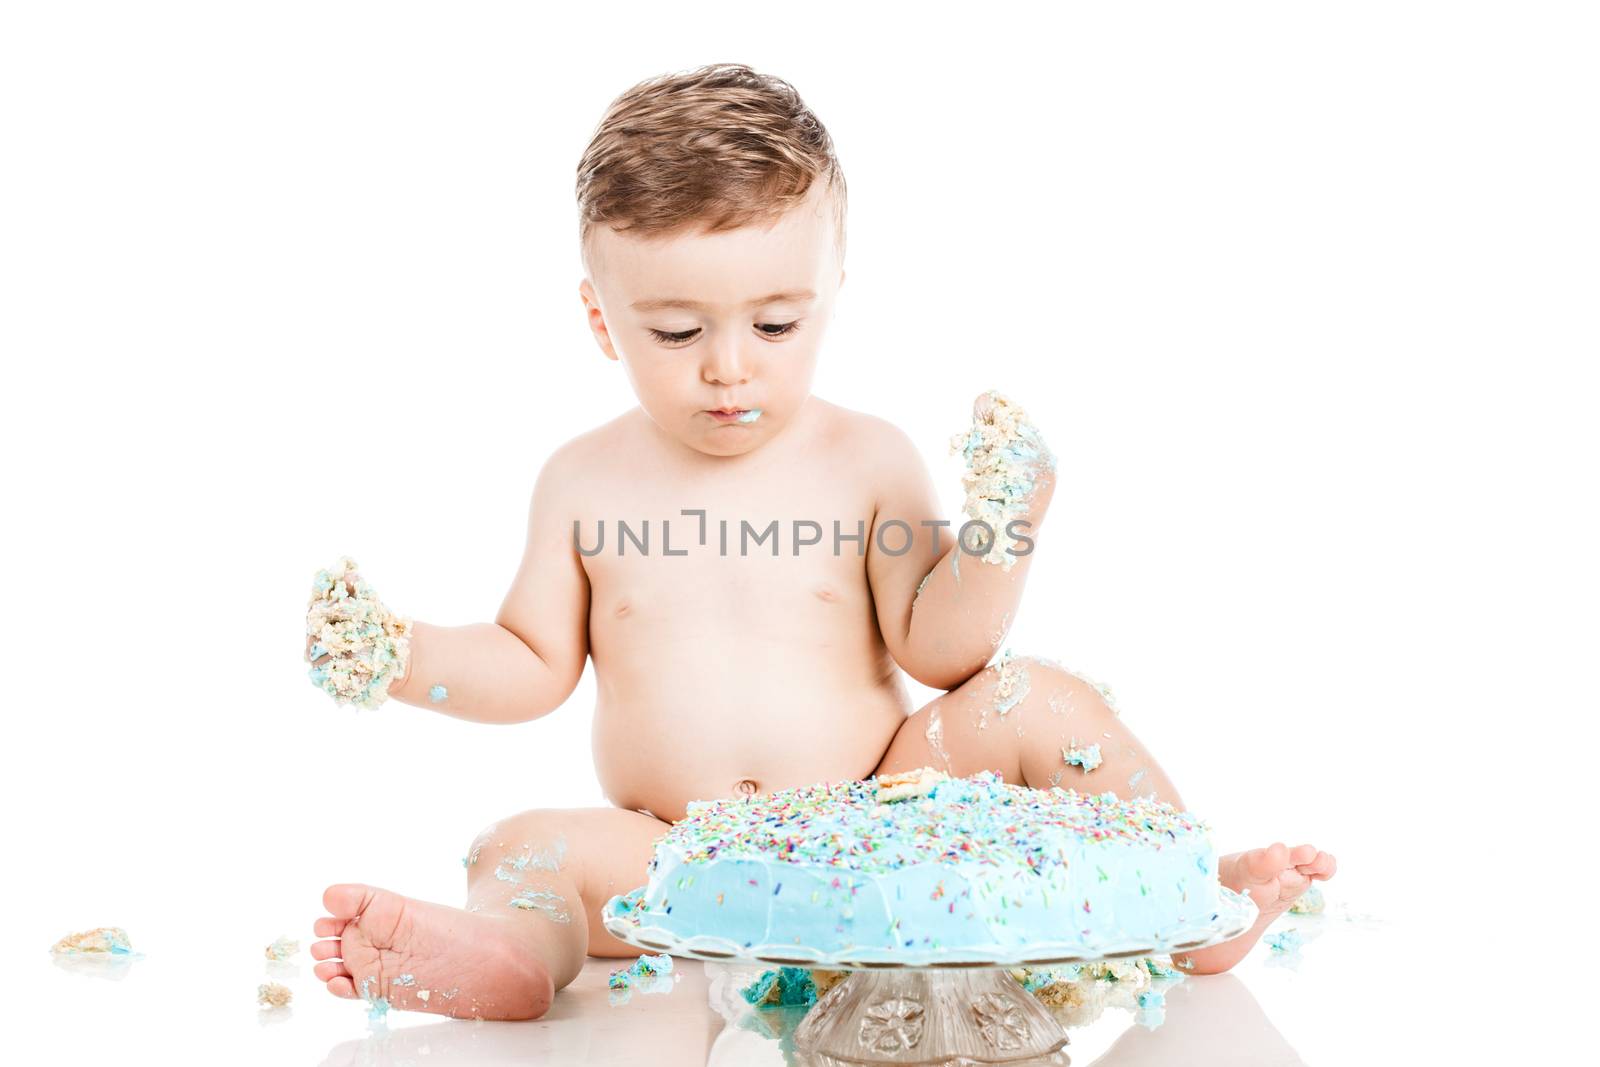 baby boy with a cake by kokimk